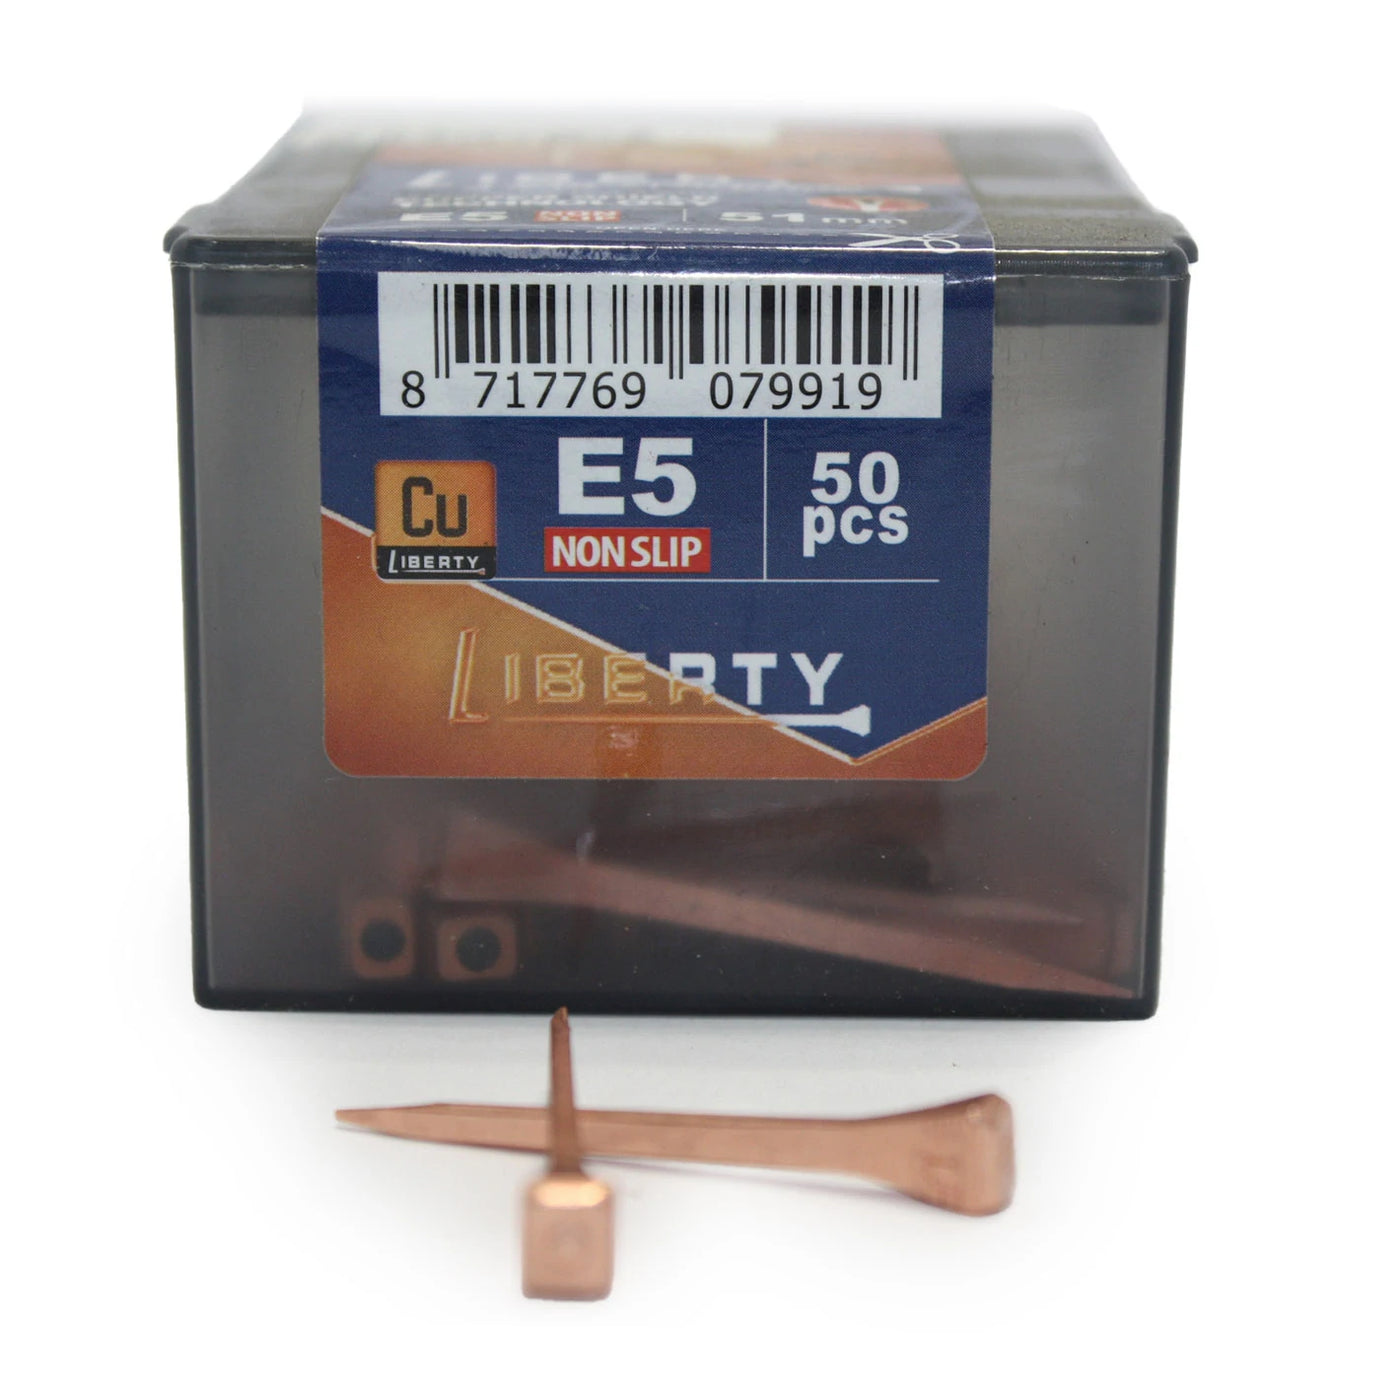 Liberty Non Slip E5 CU 50pcs